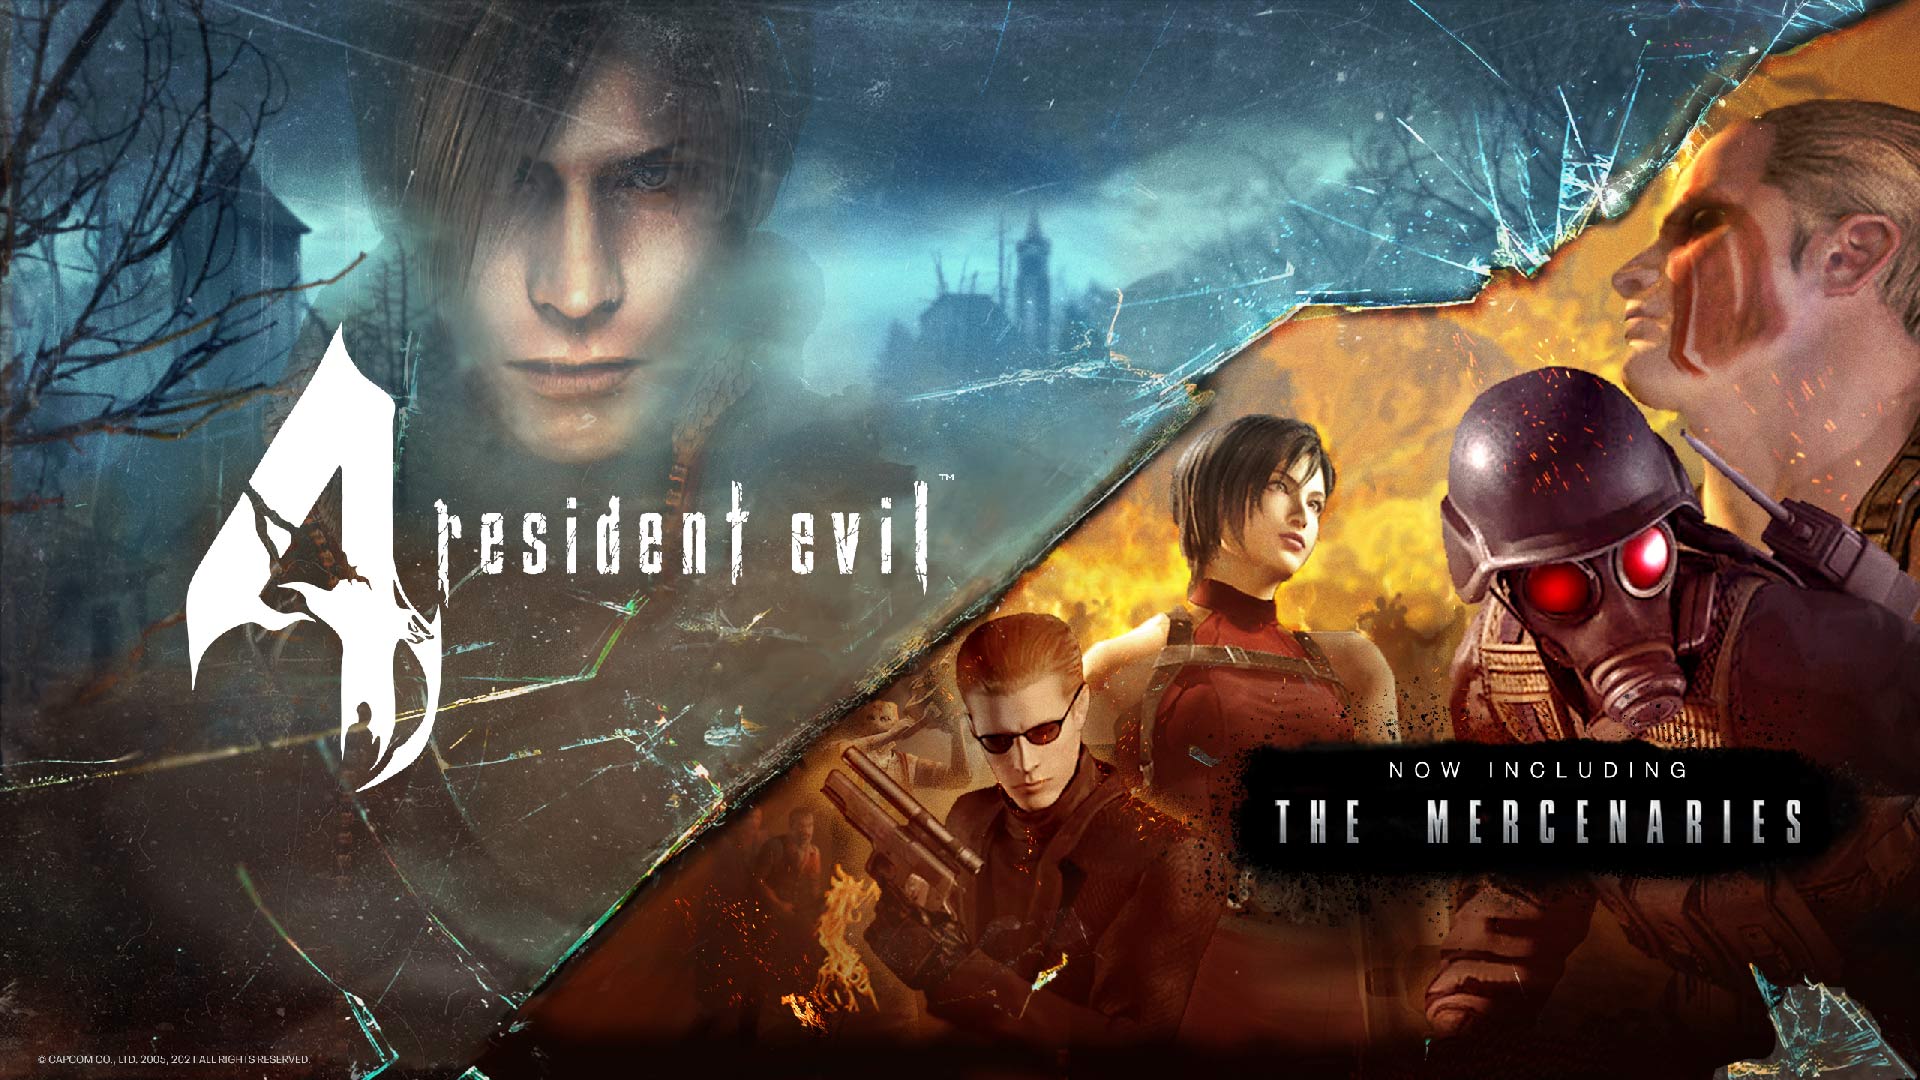 Capcom's 'Resident Evil 4' Remake Receives Release Date